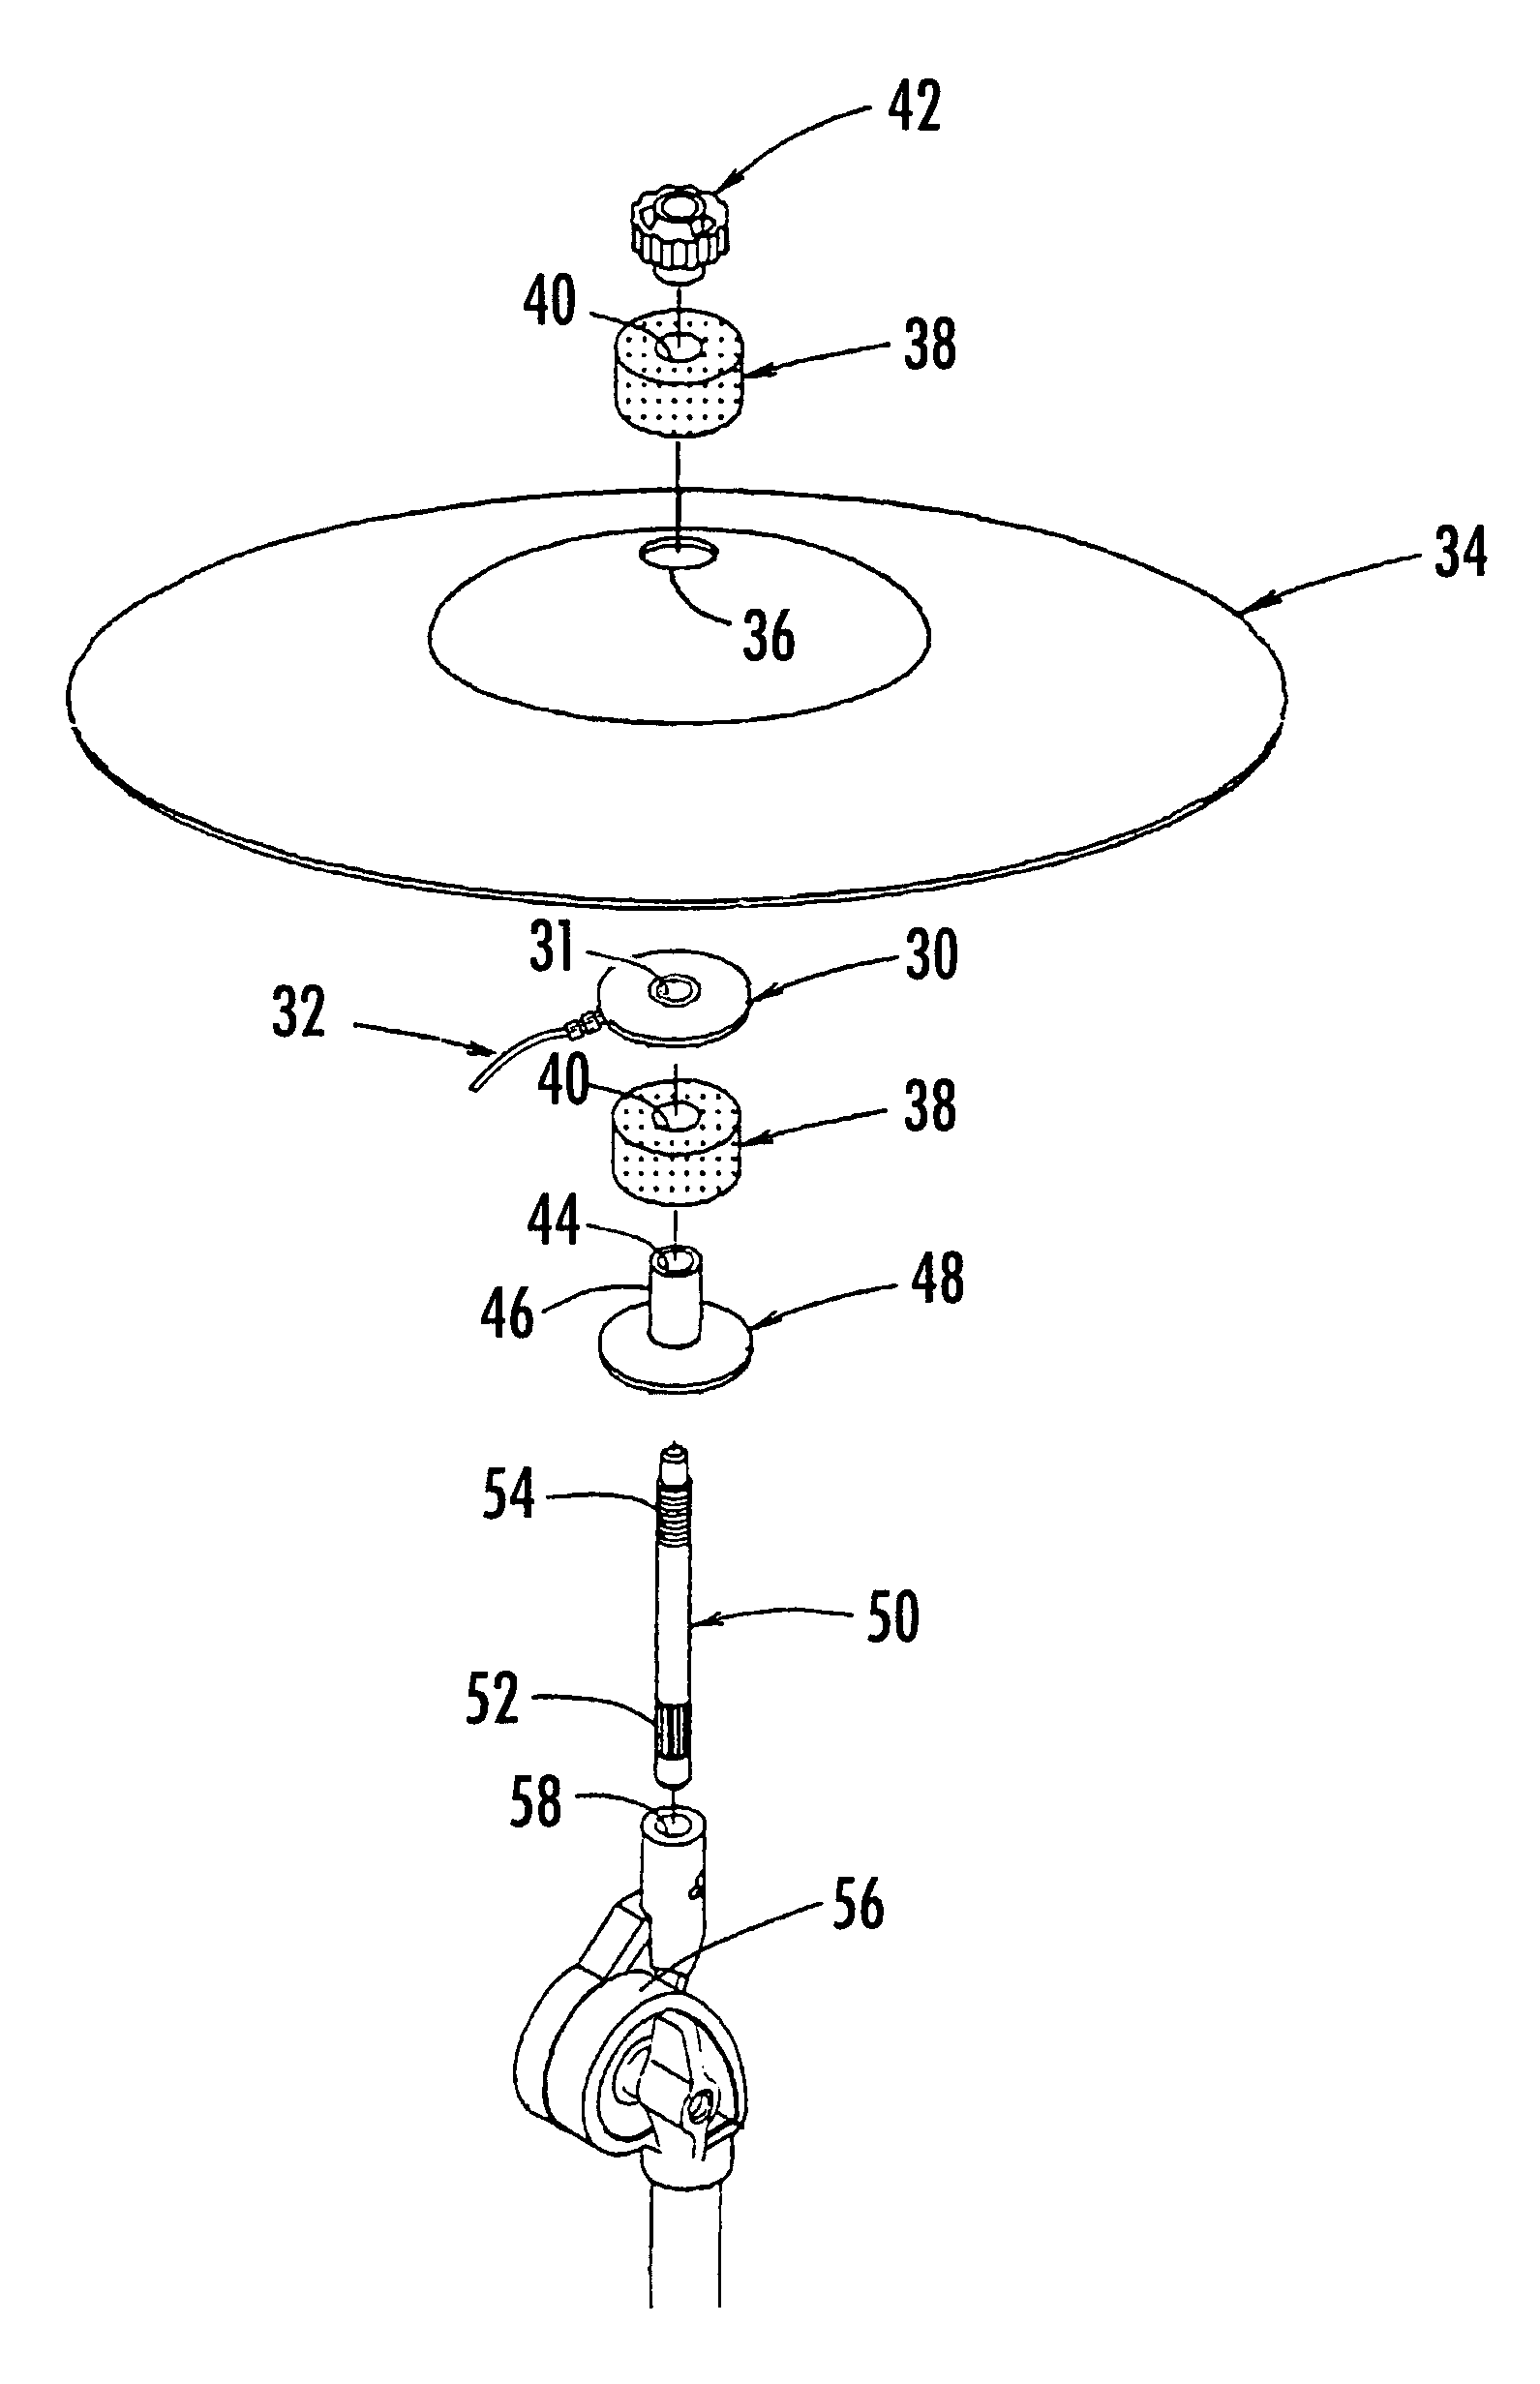 Percussion transducer